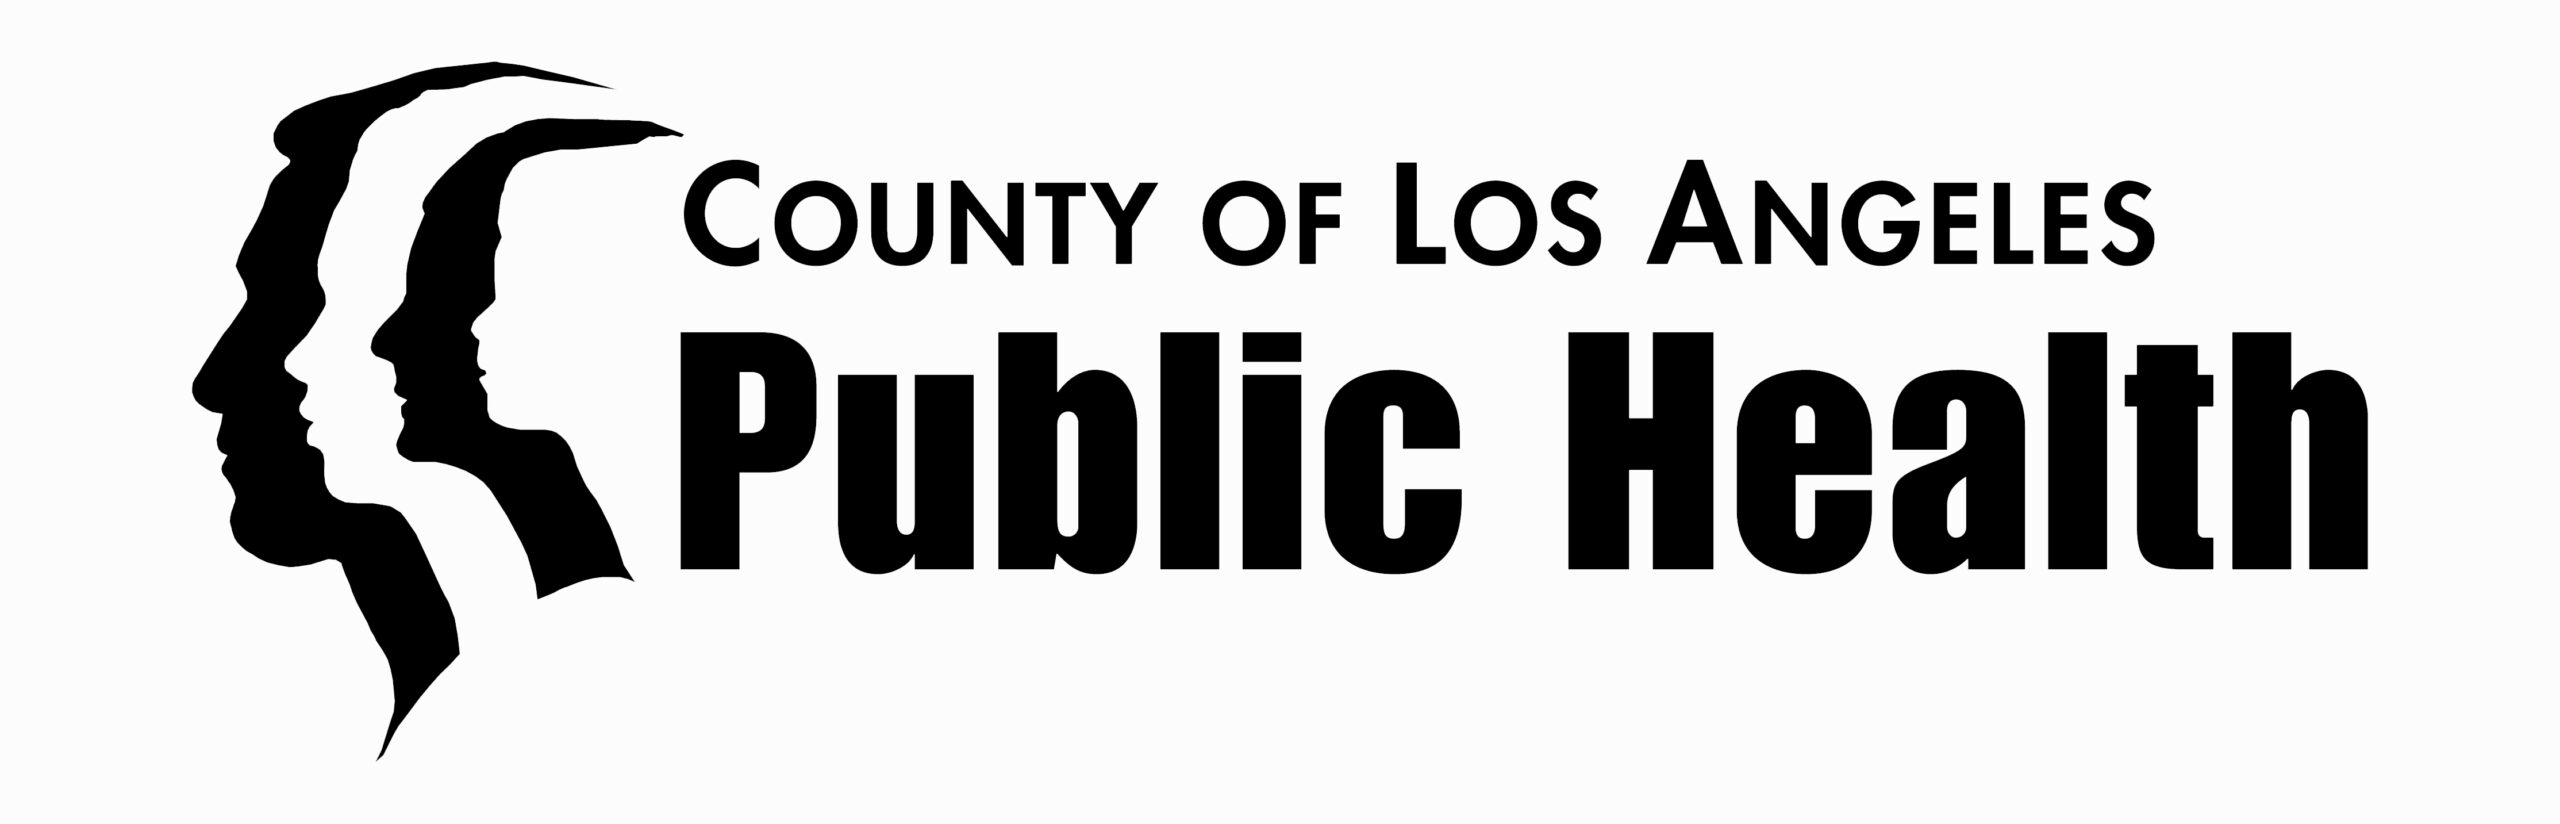 County of Public Health LA